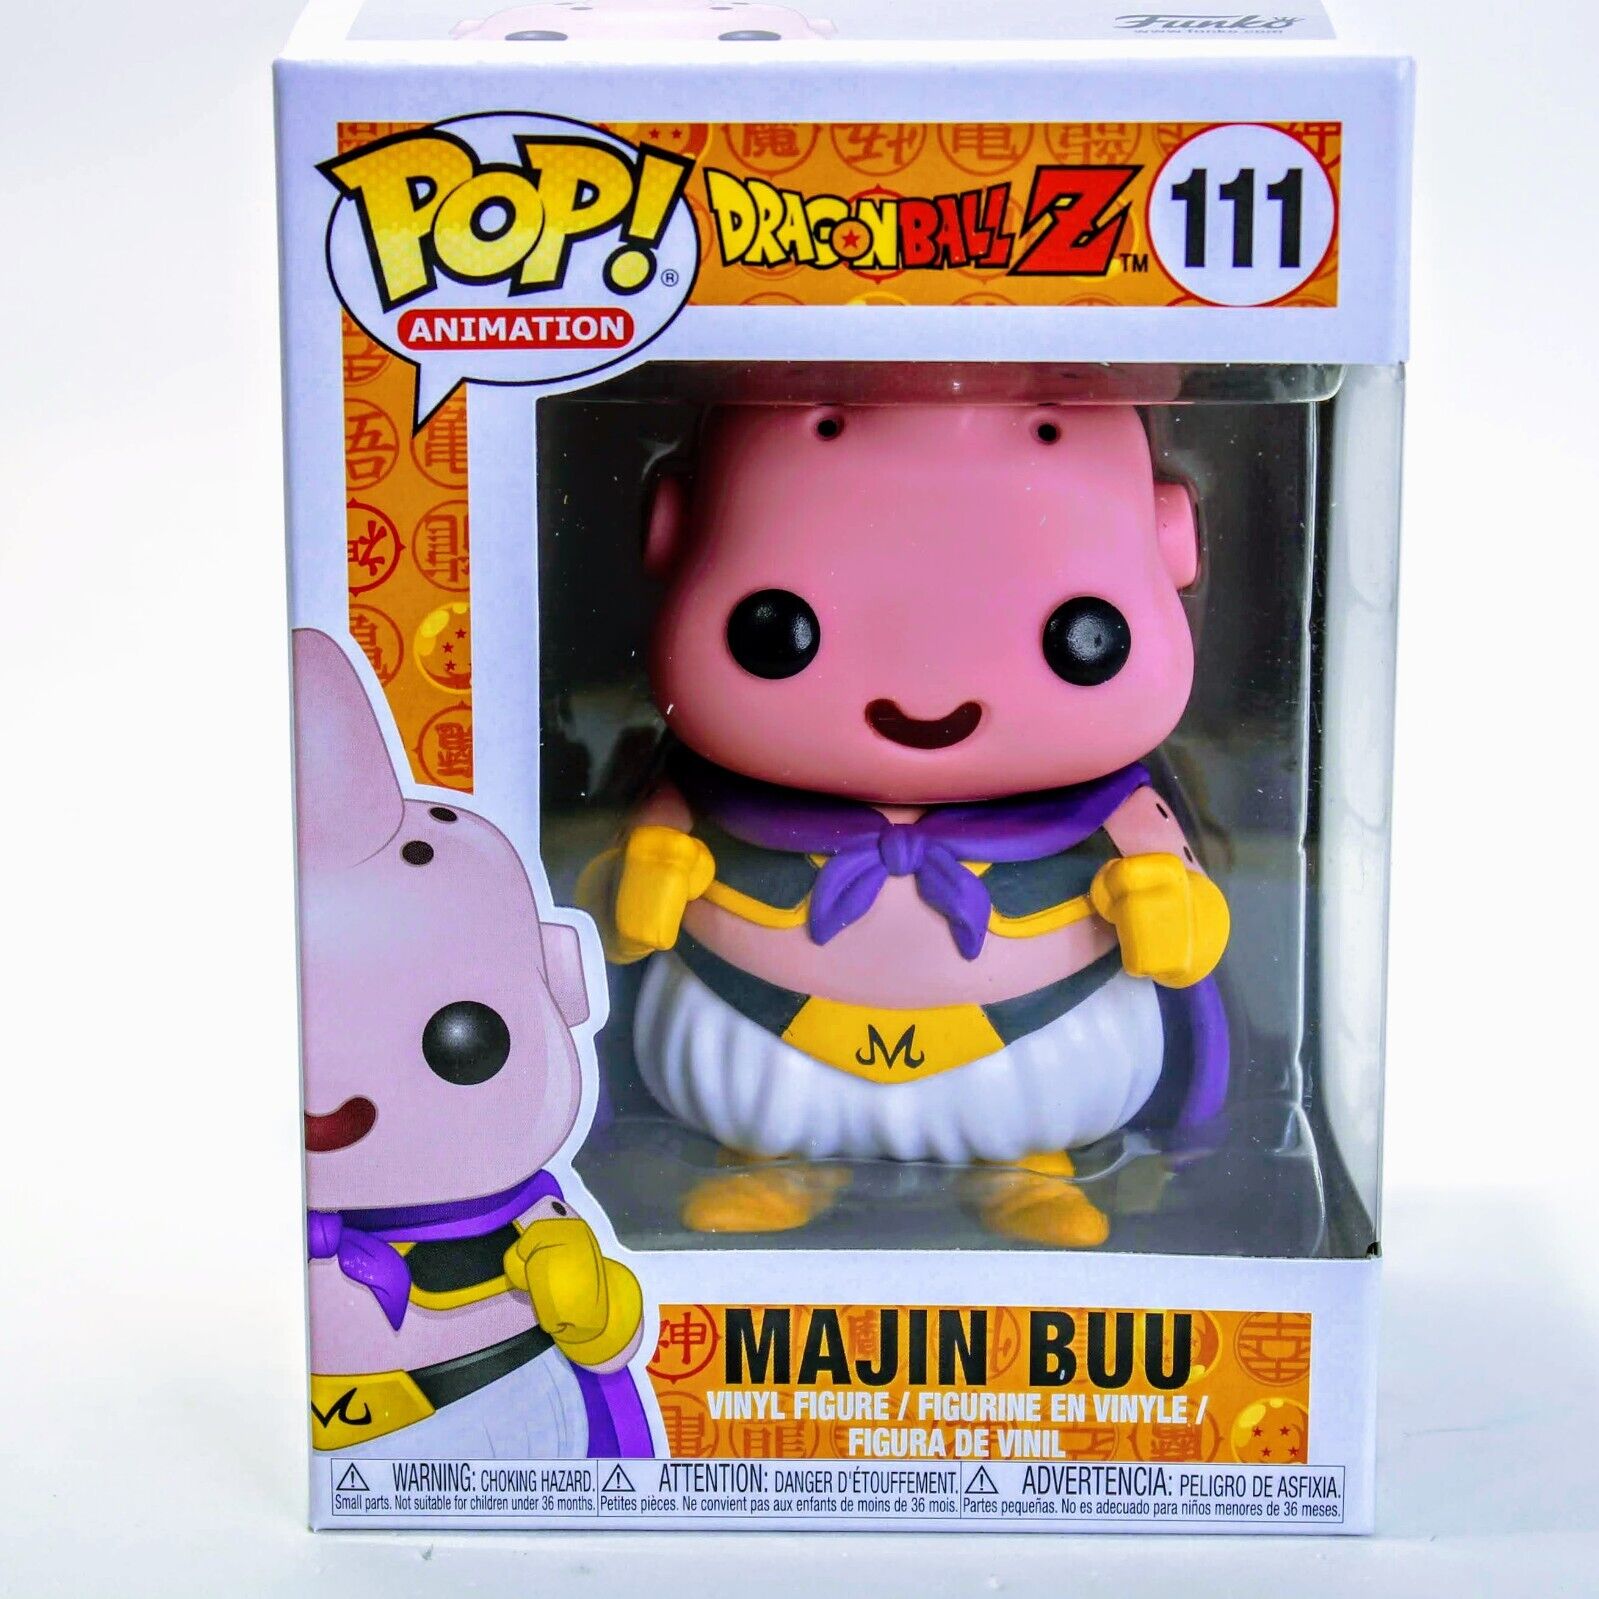 Boneco Funko Dragon Ball Z Majin Boo Buu 111 Pop Animation